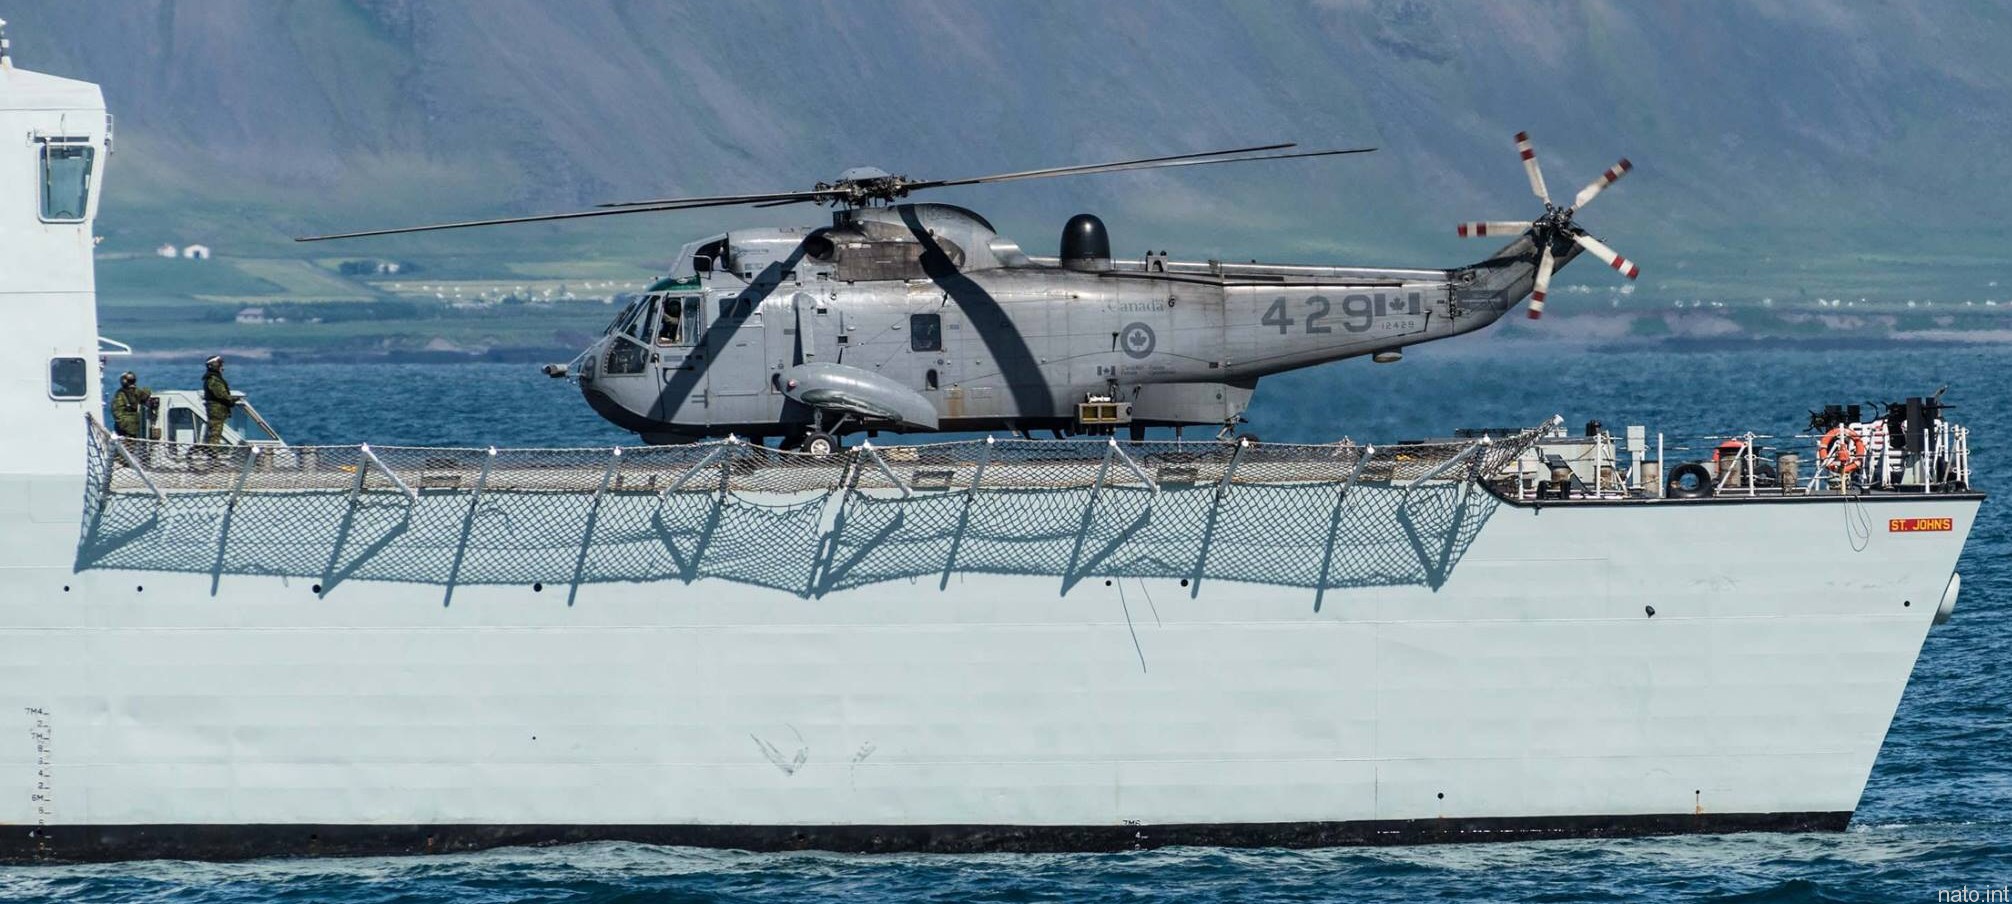 ffh-340 hmcs st. john's halifax class helicopter patrol frigate ncsm royal canadian navy 27 ch-124 sea king